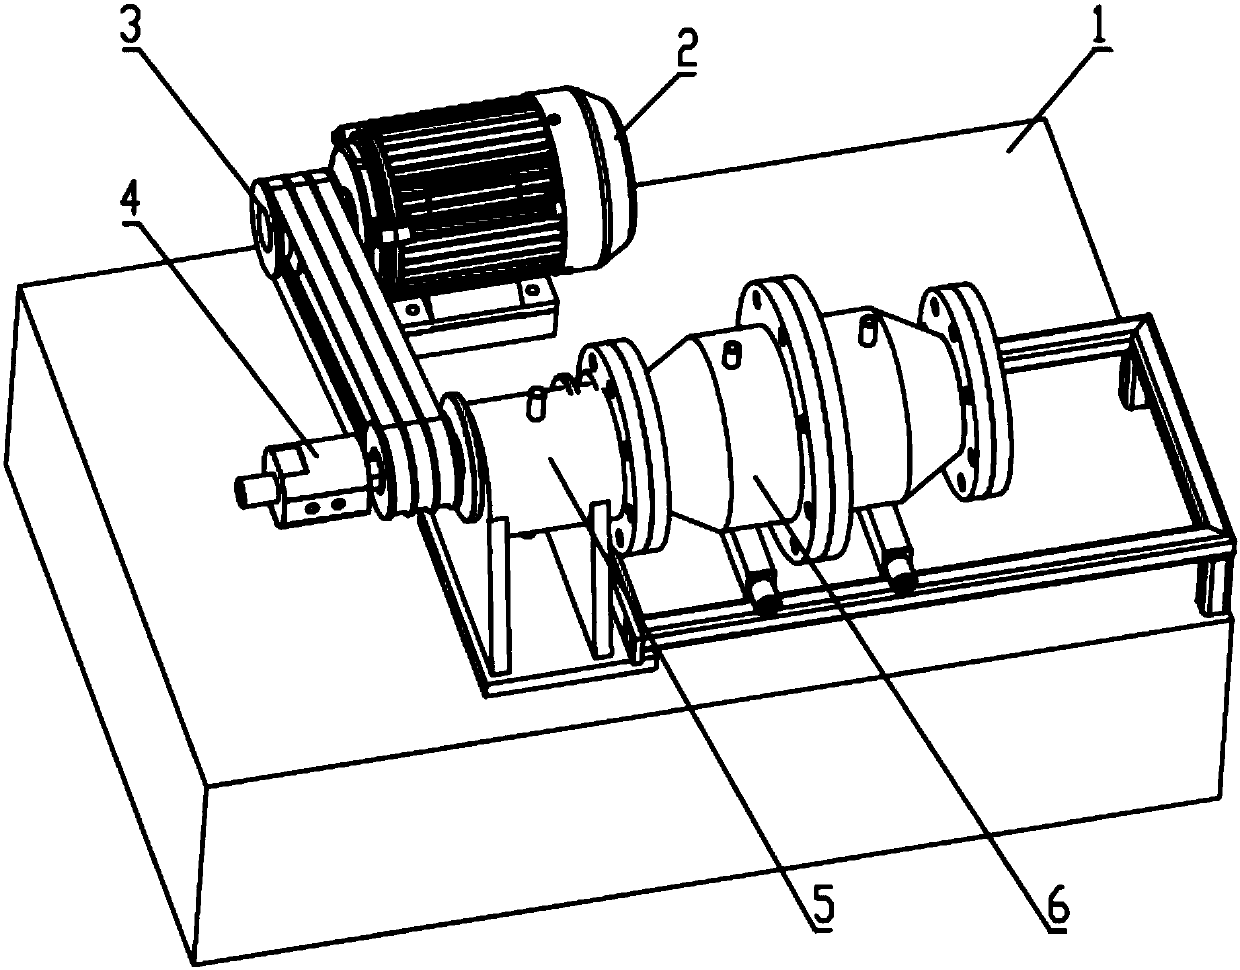 Rod pin type bifrustum-shaped sand mill device